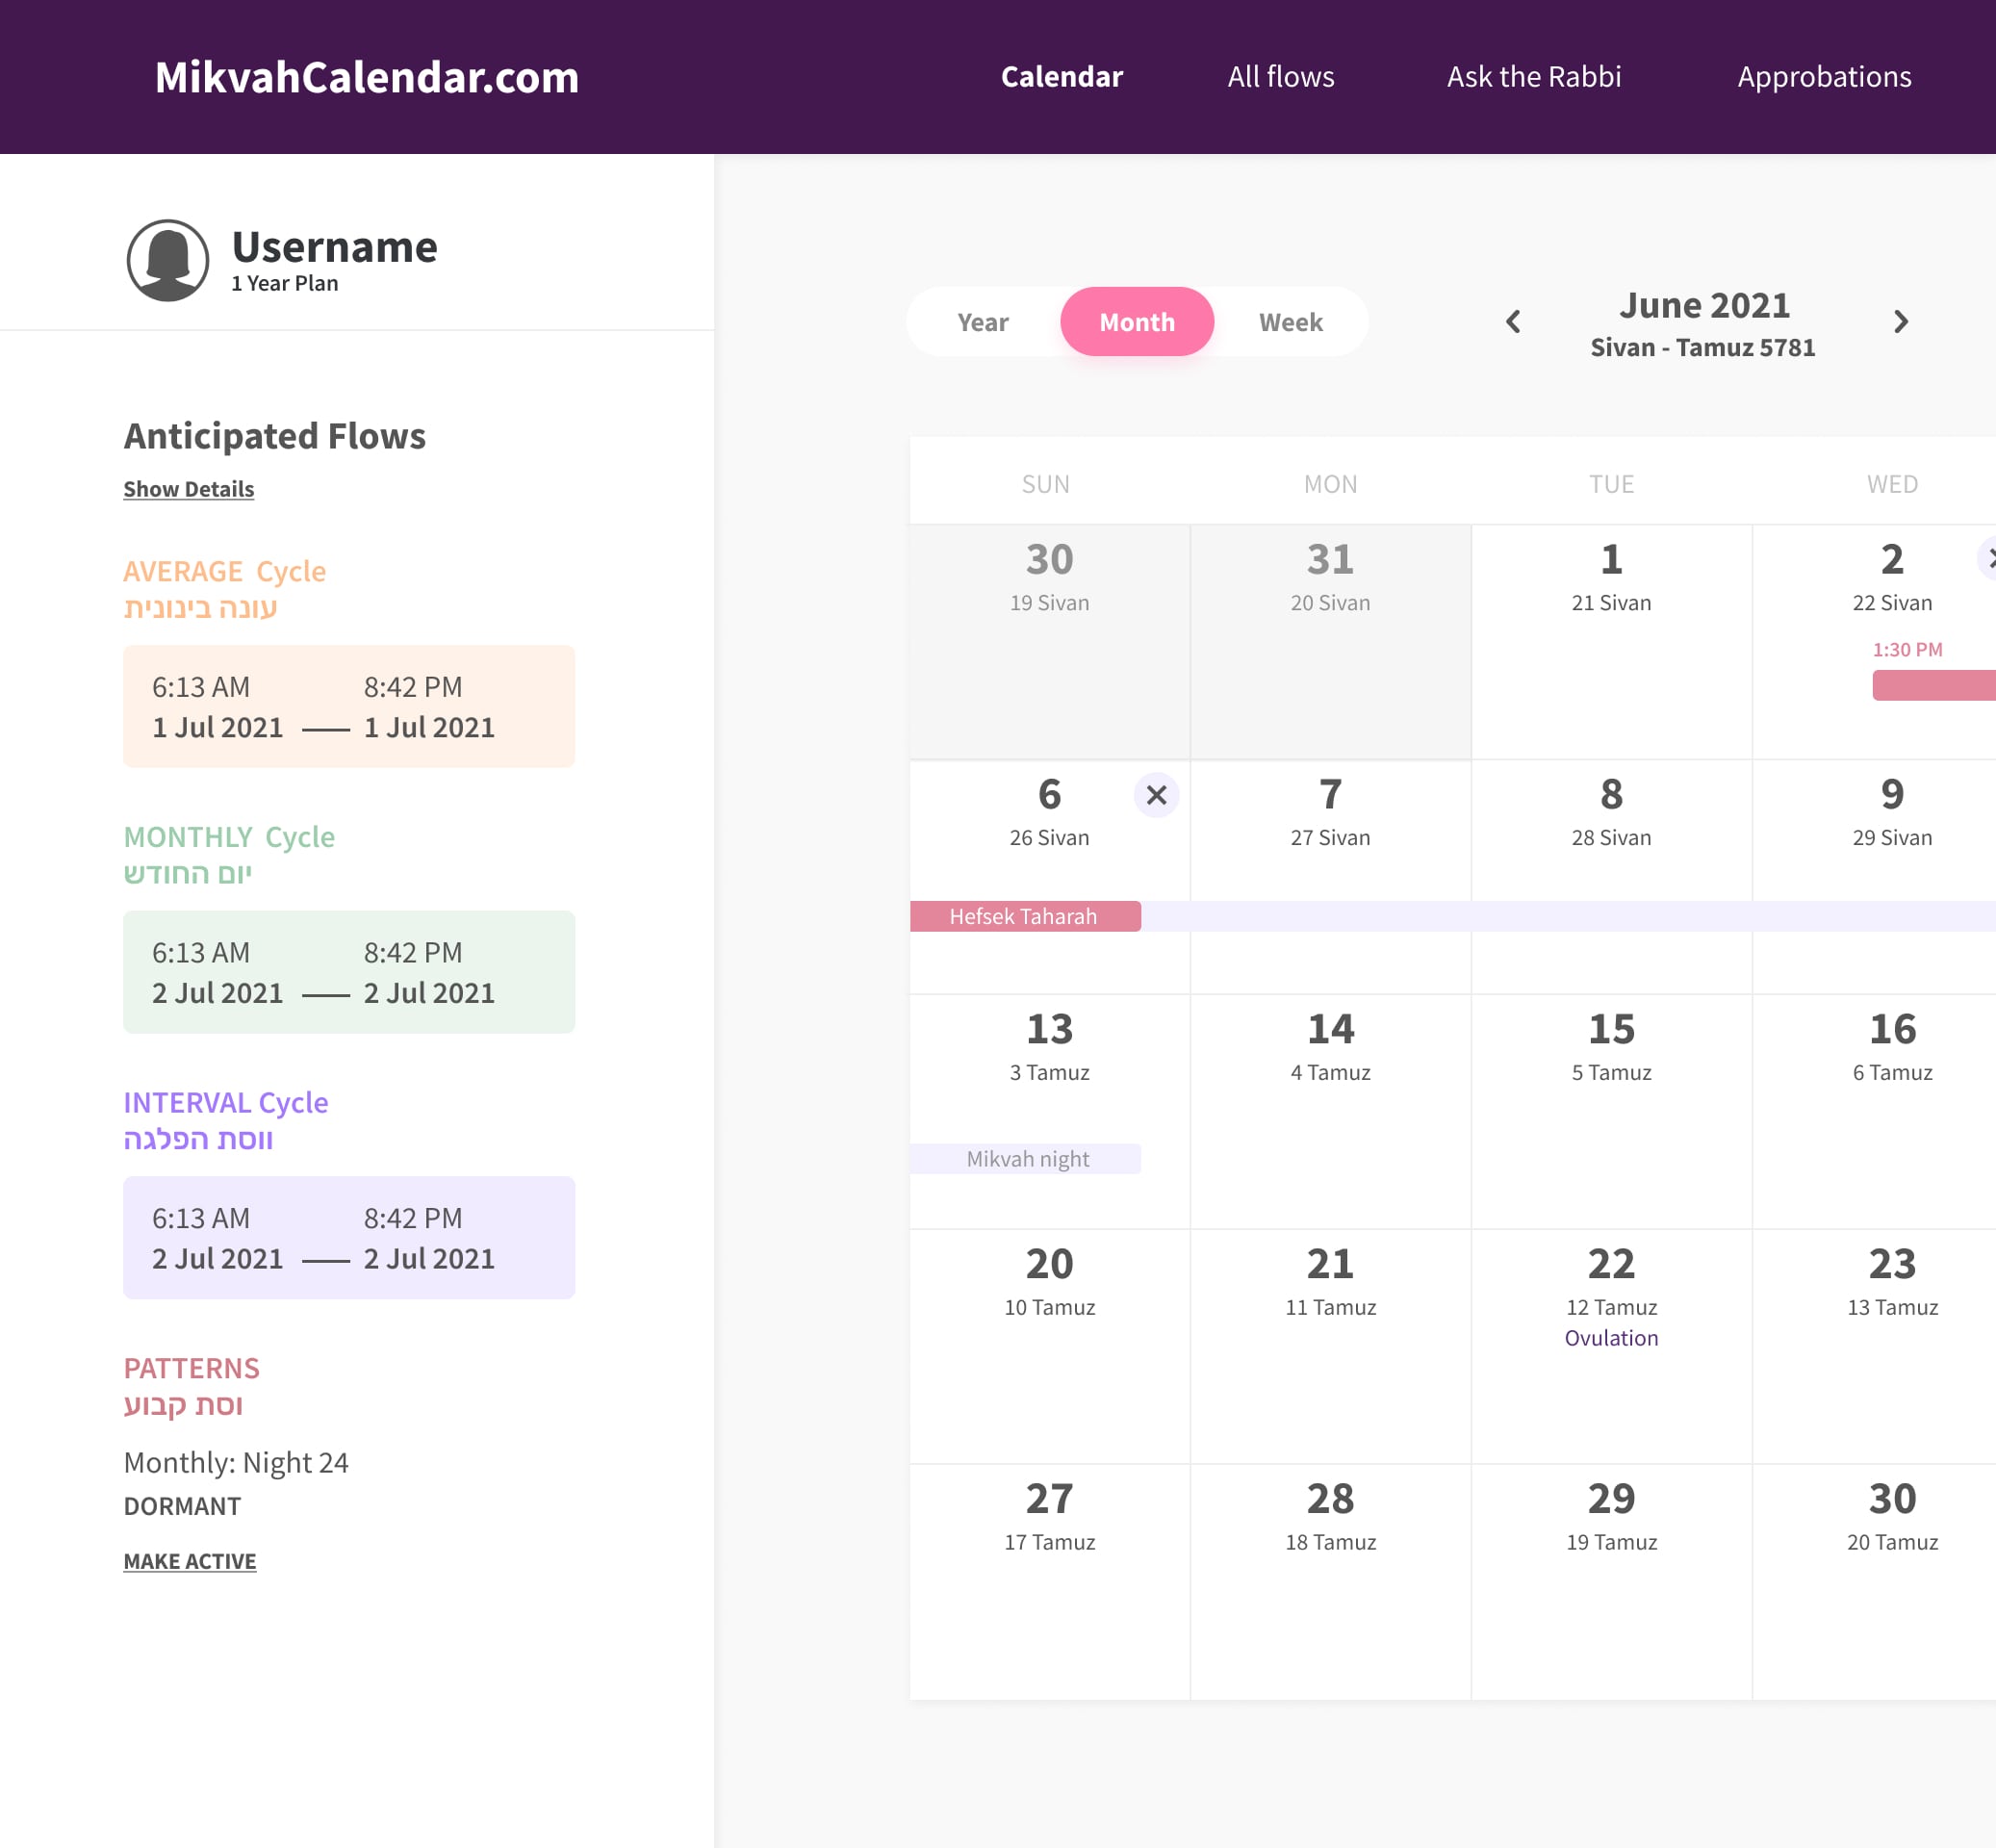 Mikvah Calendar App & Website for All Customs